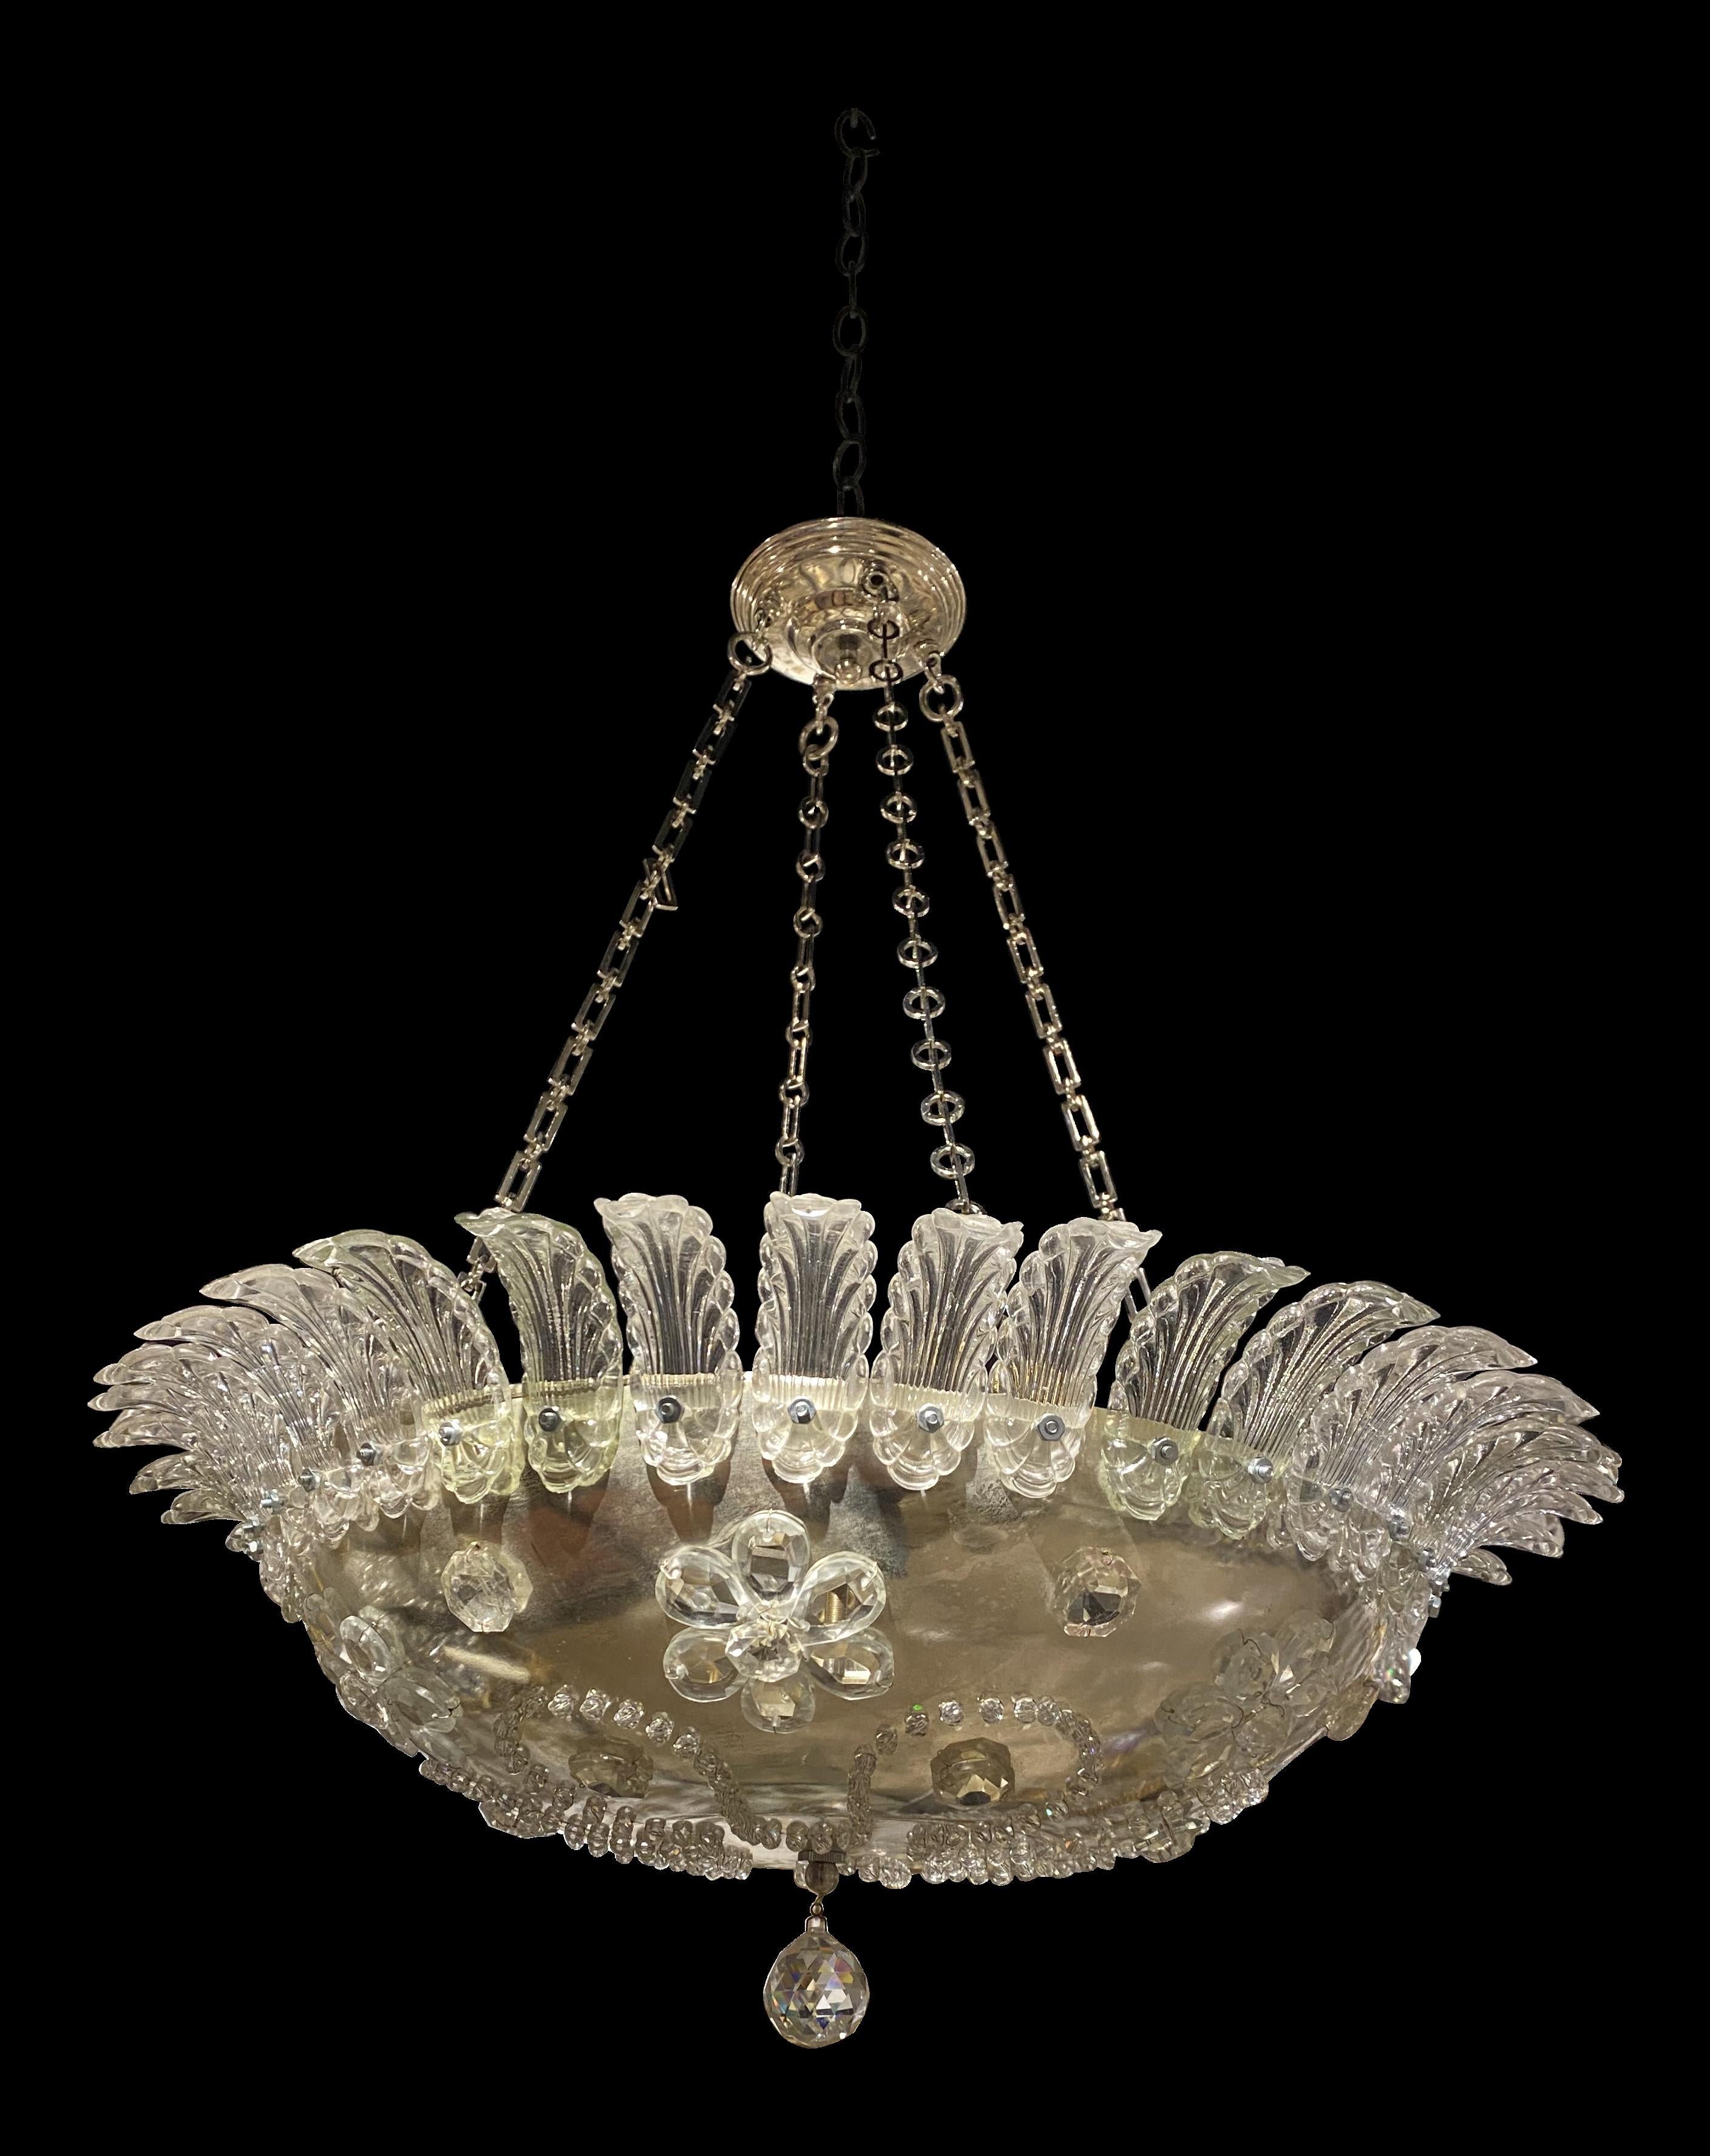 modern crystal pendant chandelier